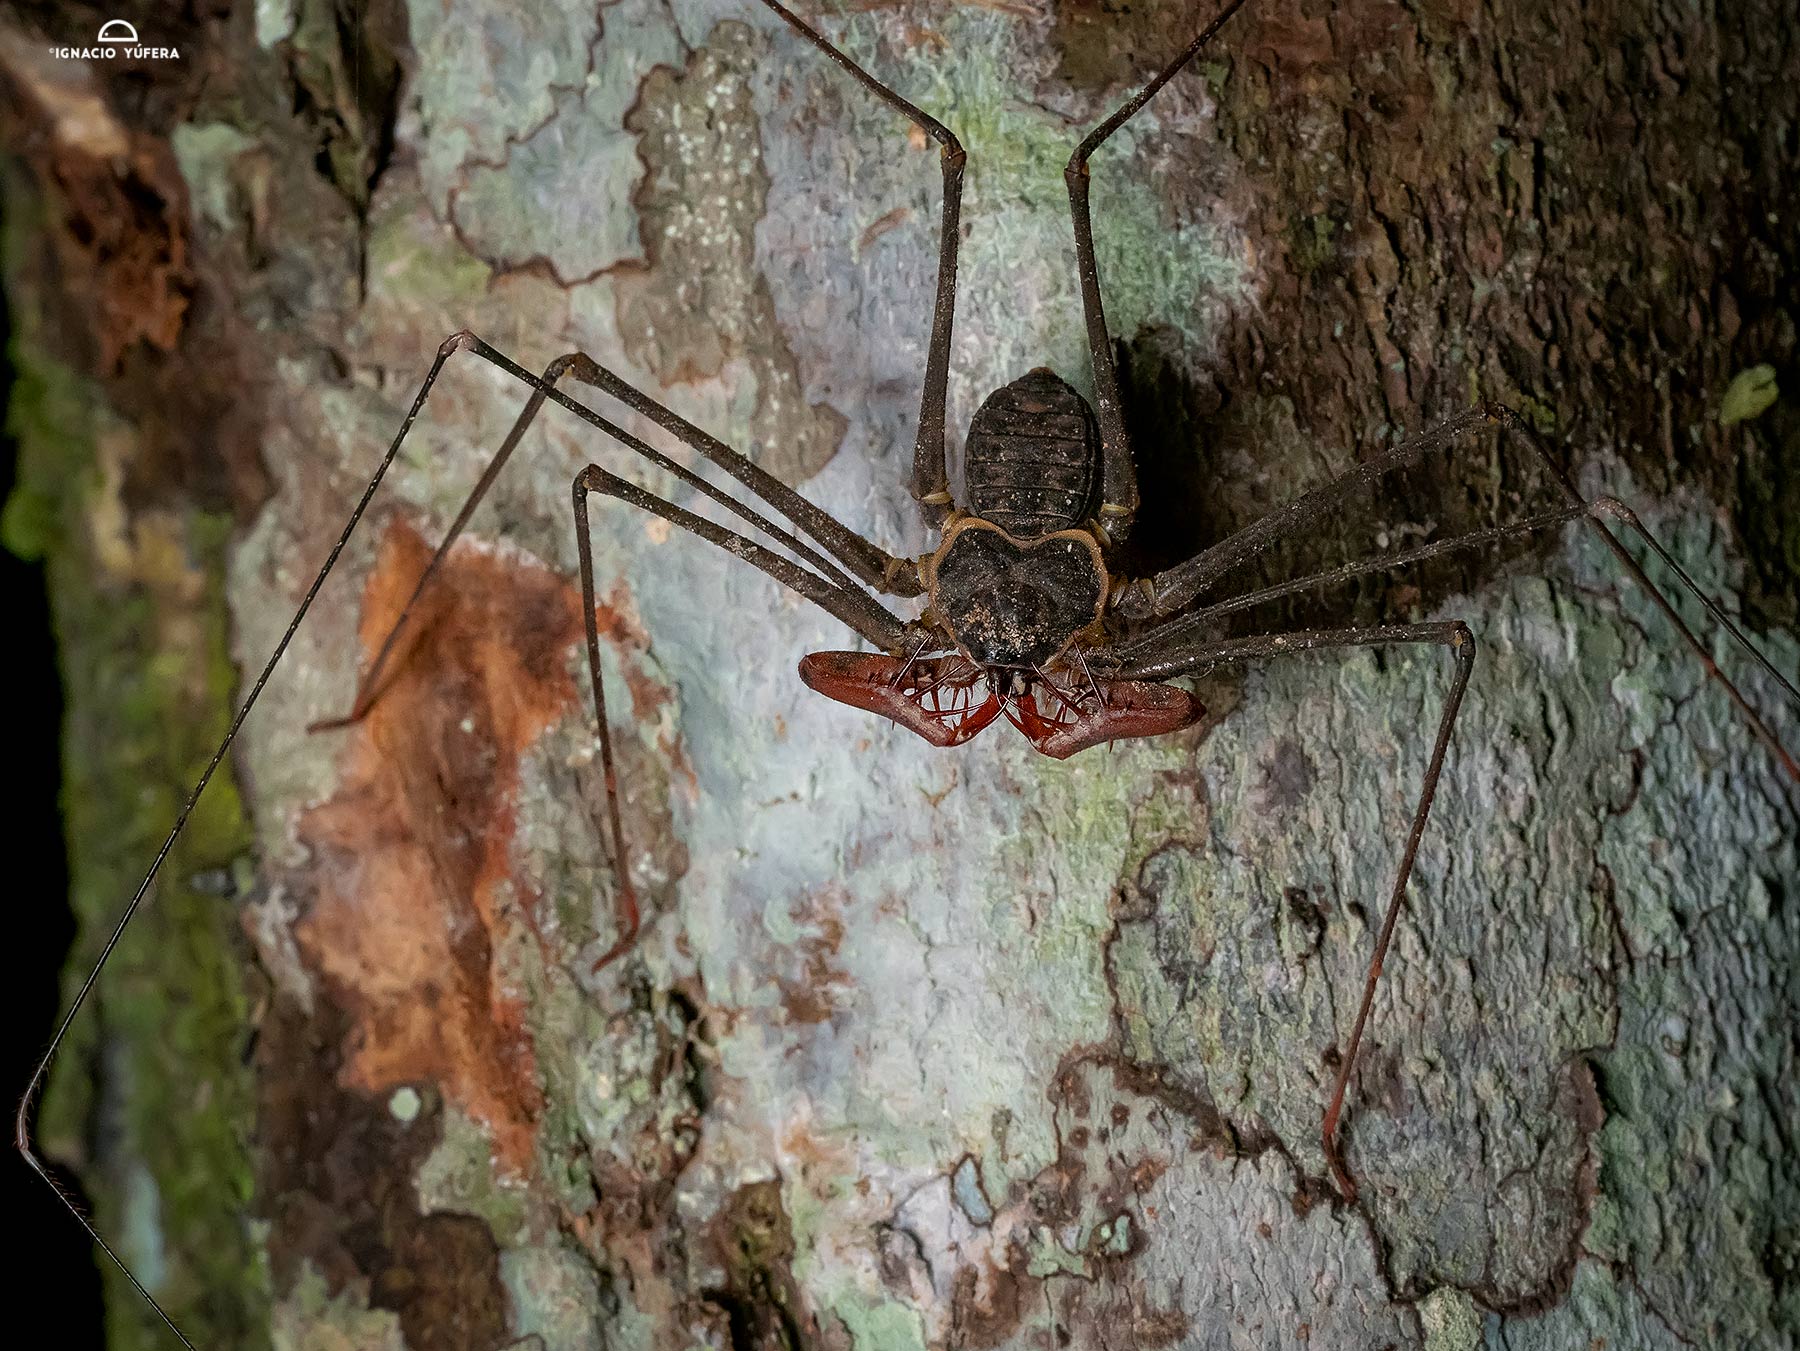 Amblypygid (Tailless Whip Scorpion), Yasuni, Ecuador